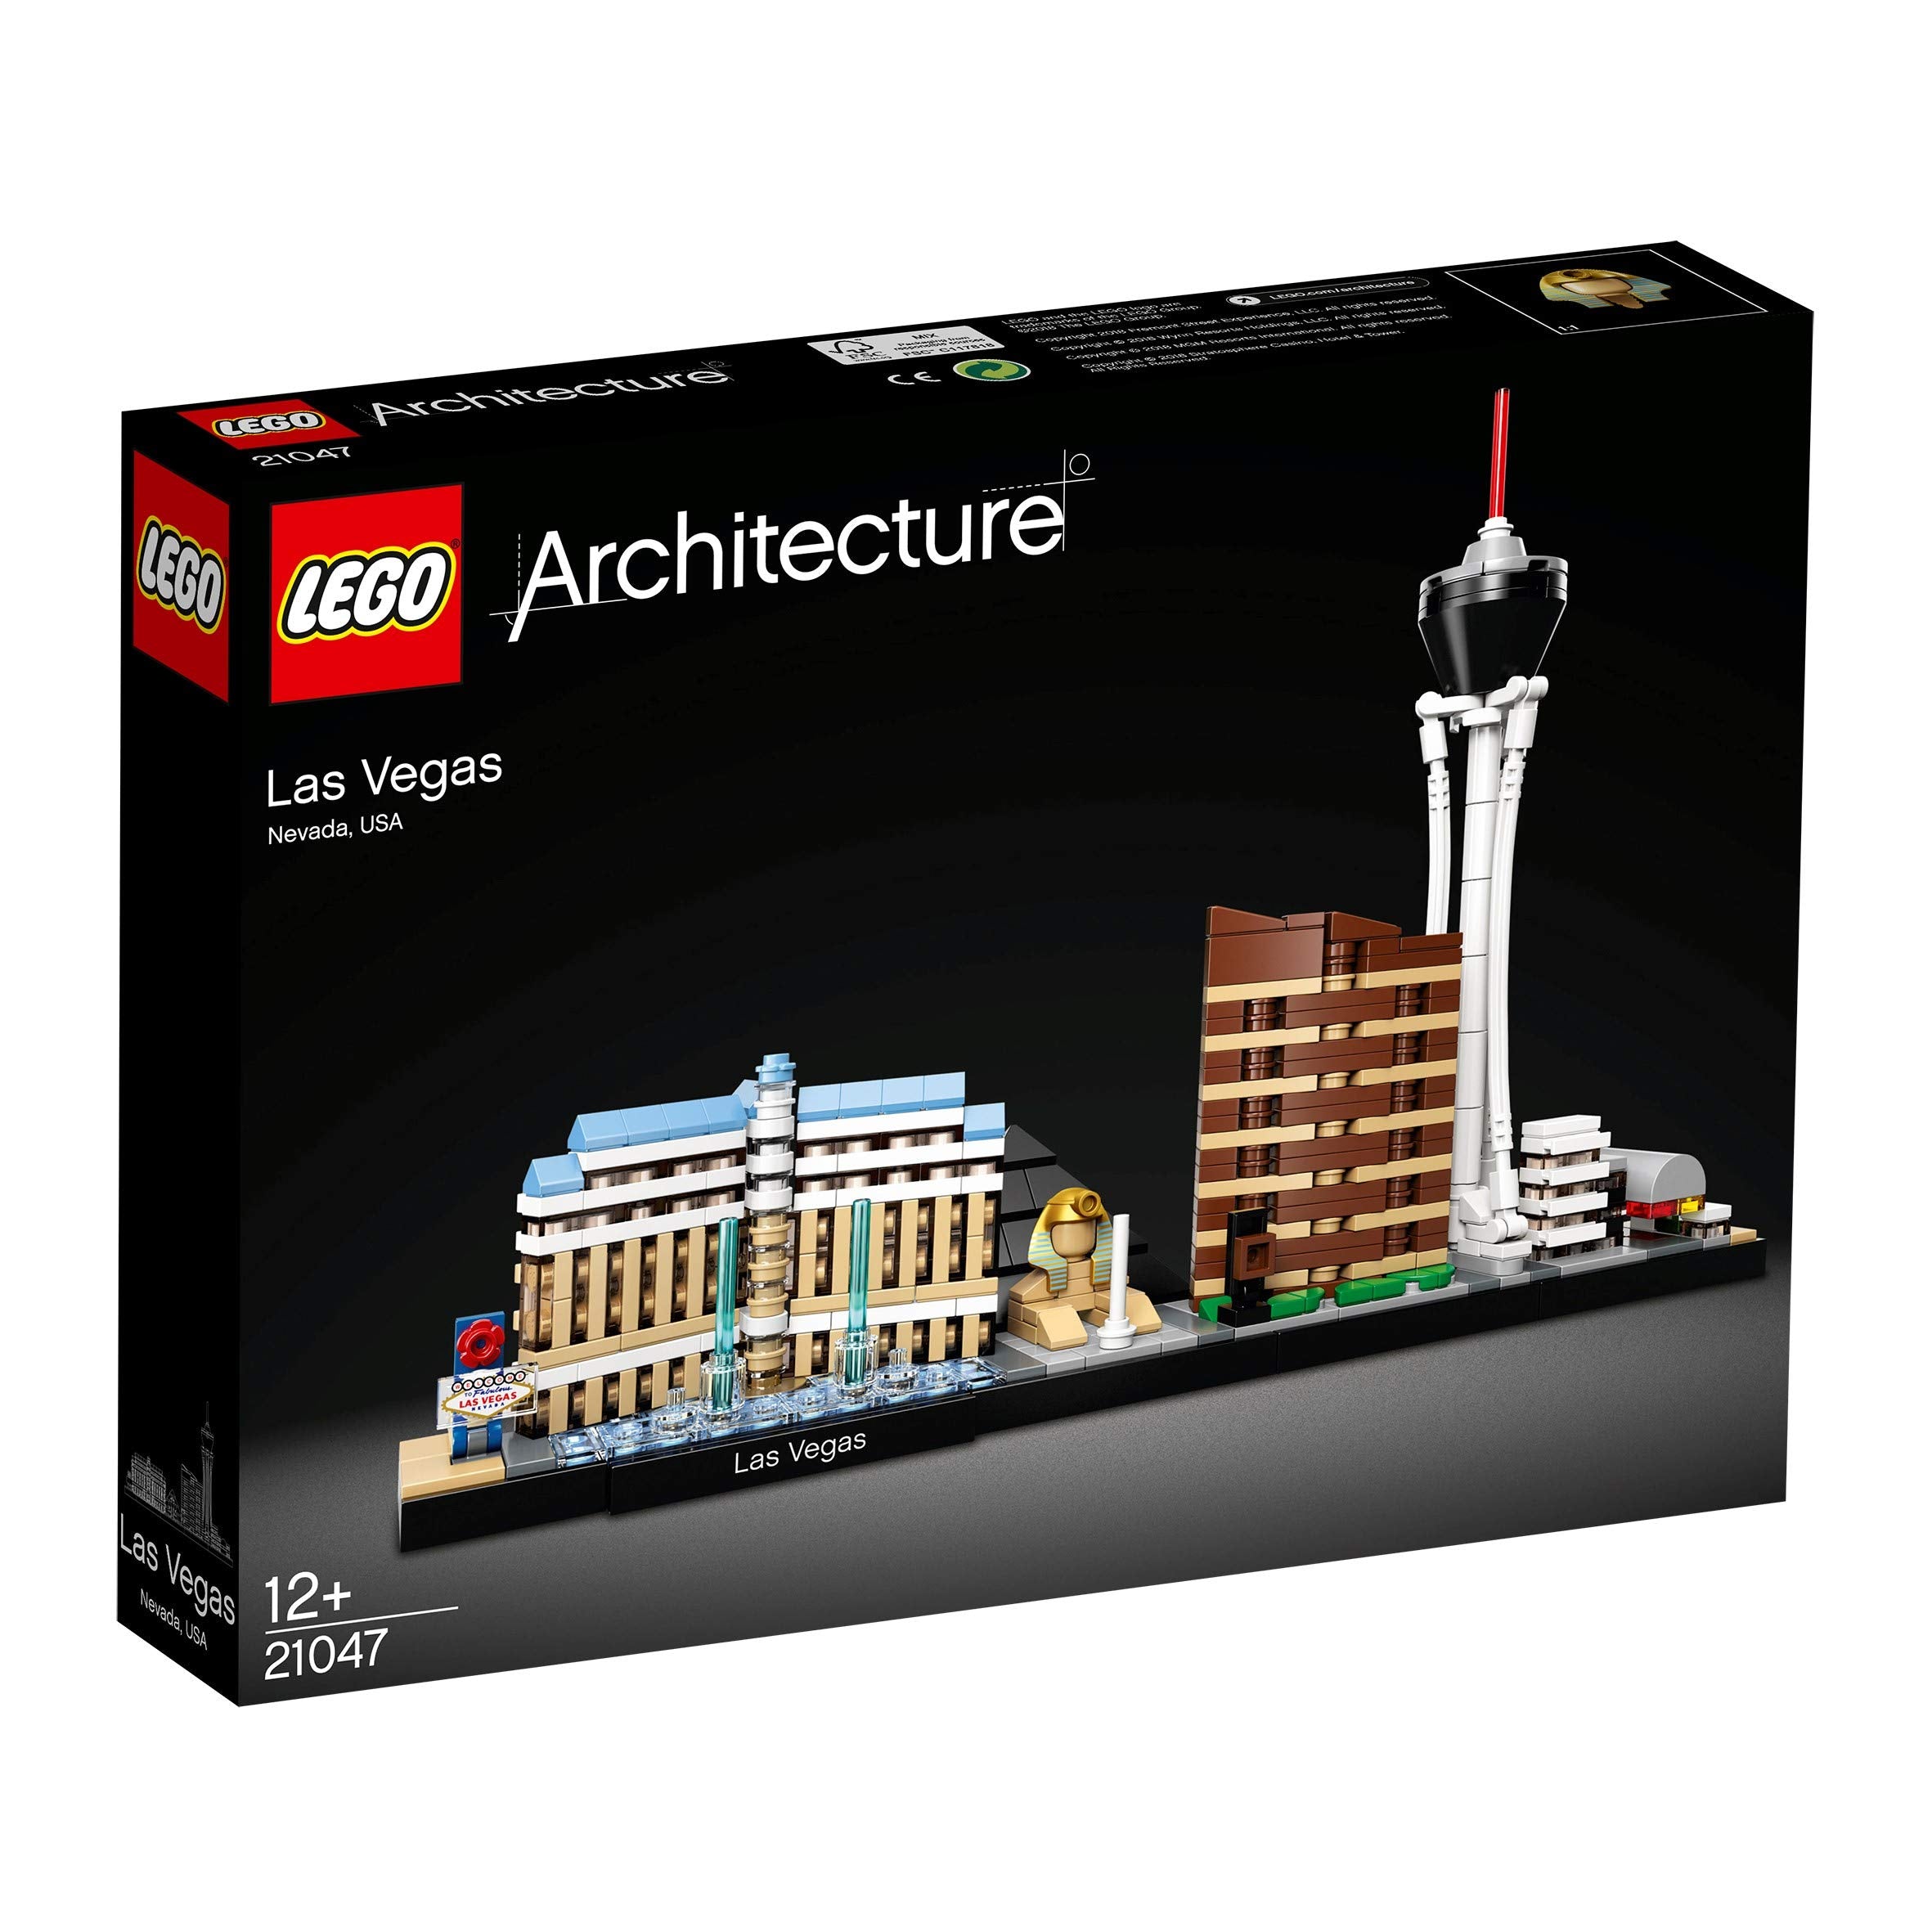 LEGO 21047 Architecture Las Vegas (Like New, Open Box)